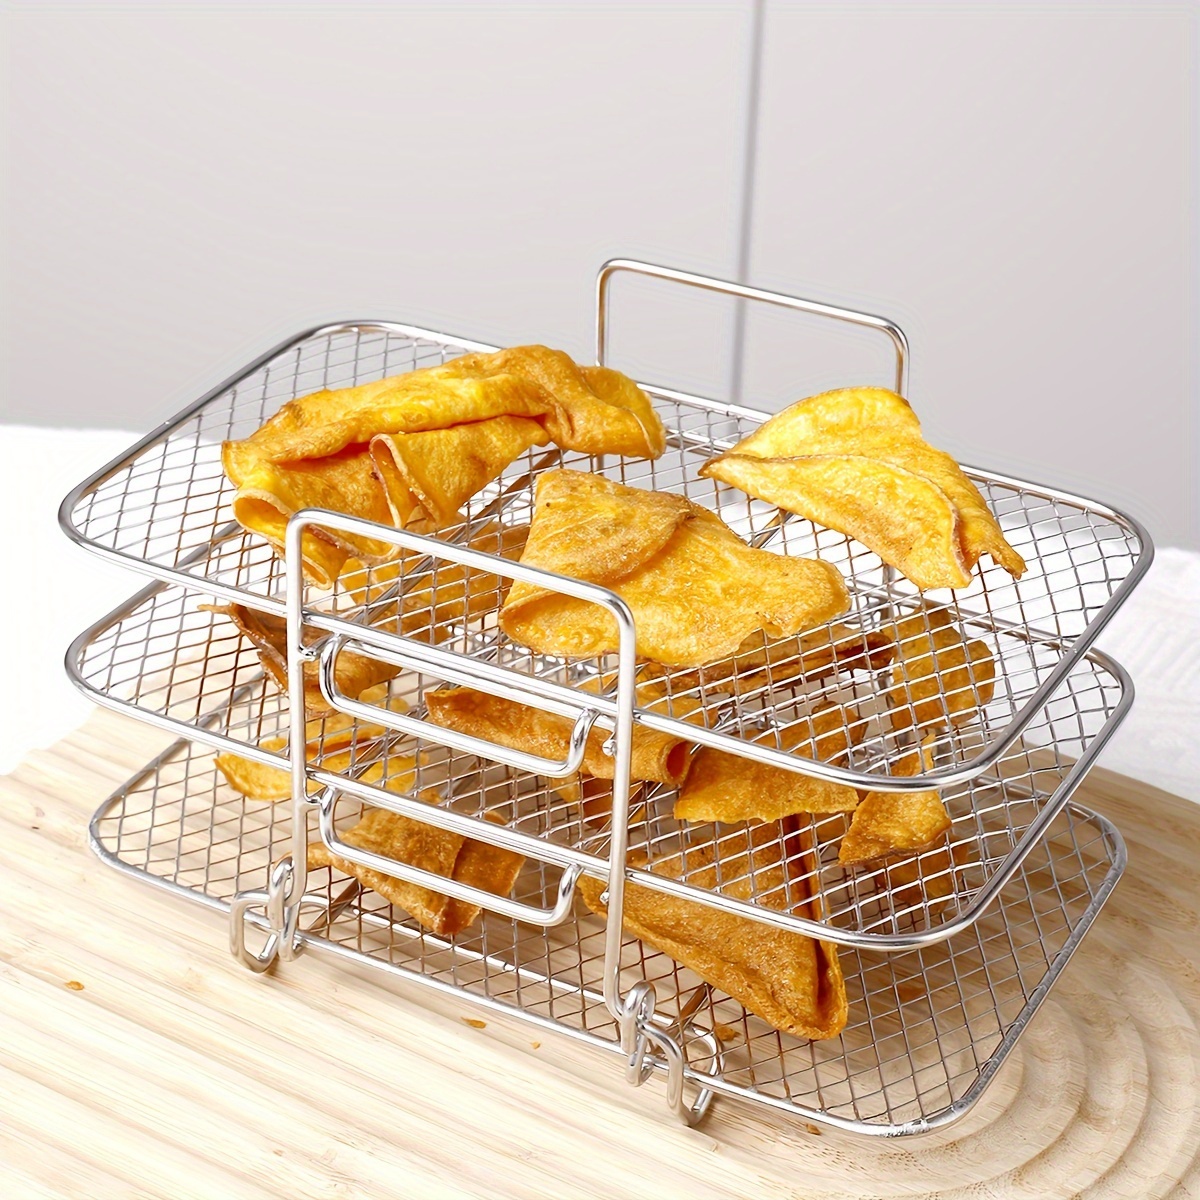 Air Fryer Rack For Ninja Air Fryer Multi layer Double Basket - Temu